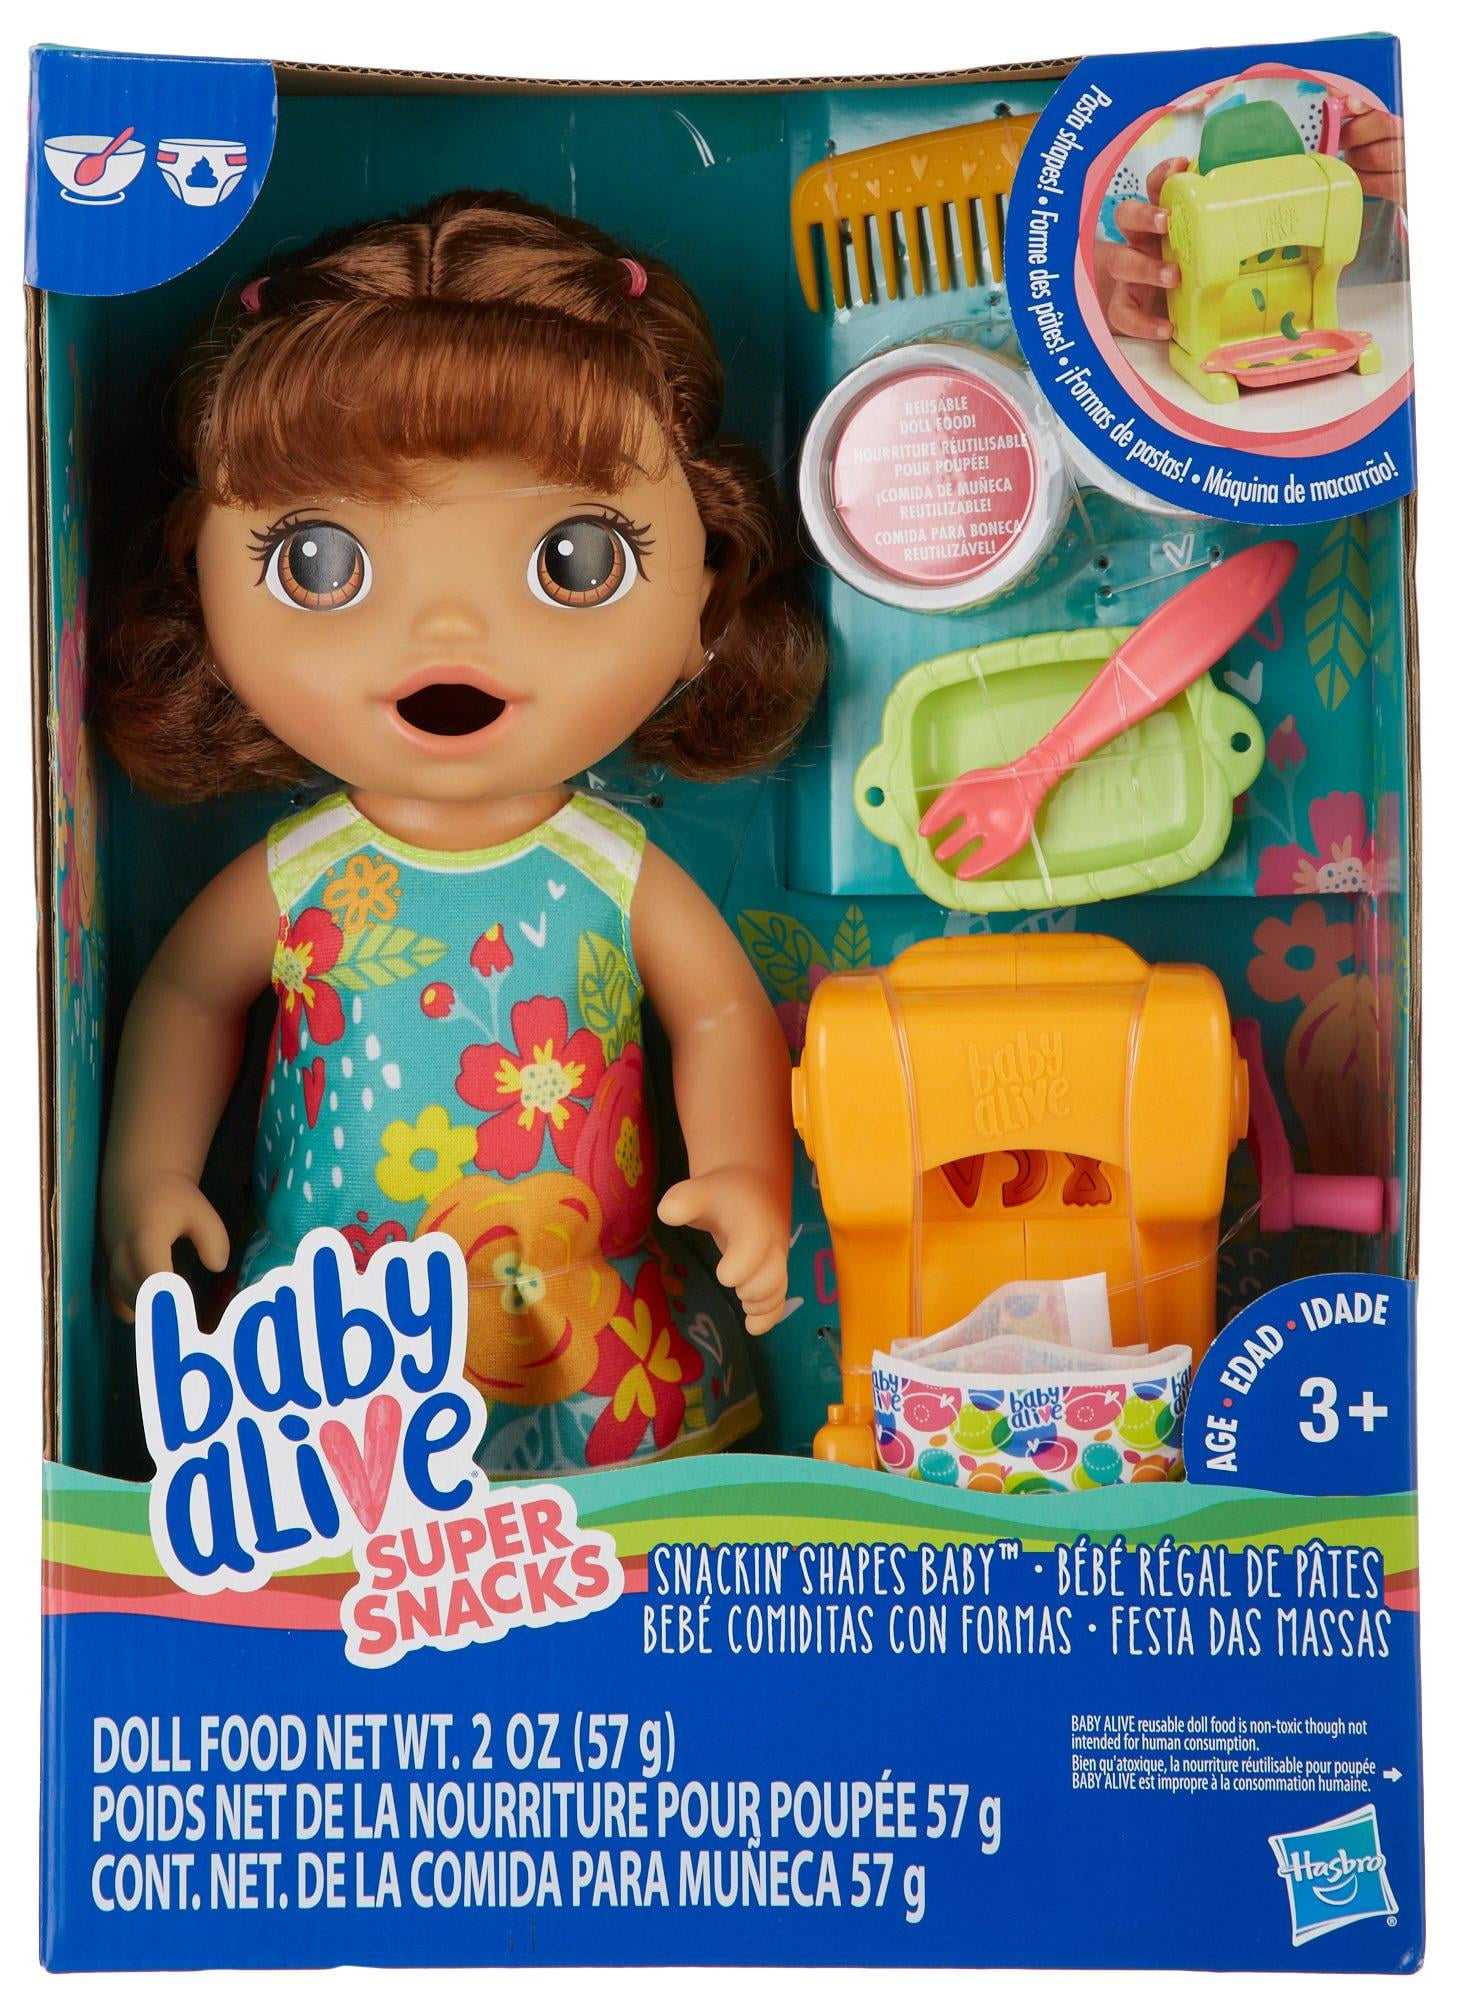 Baby Super Snacks Snackin' Shapes Doll - Walmart.com